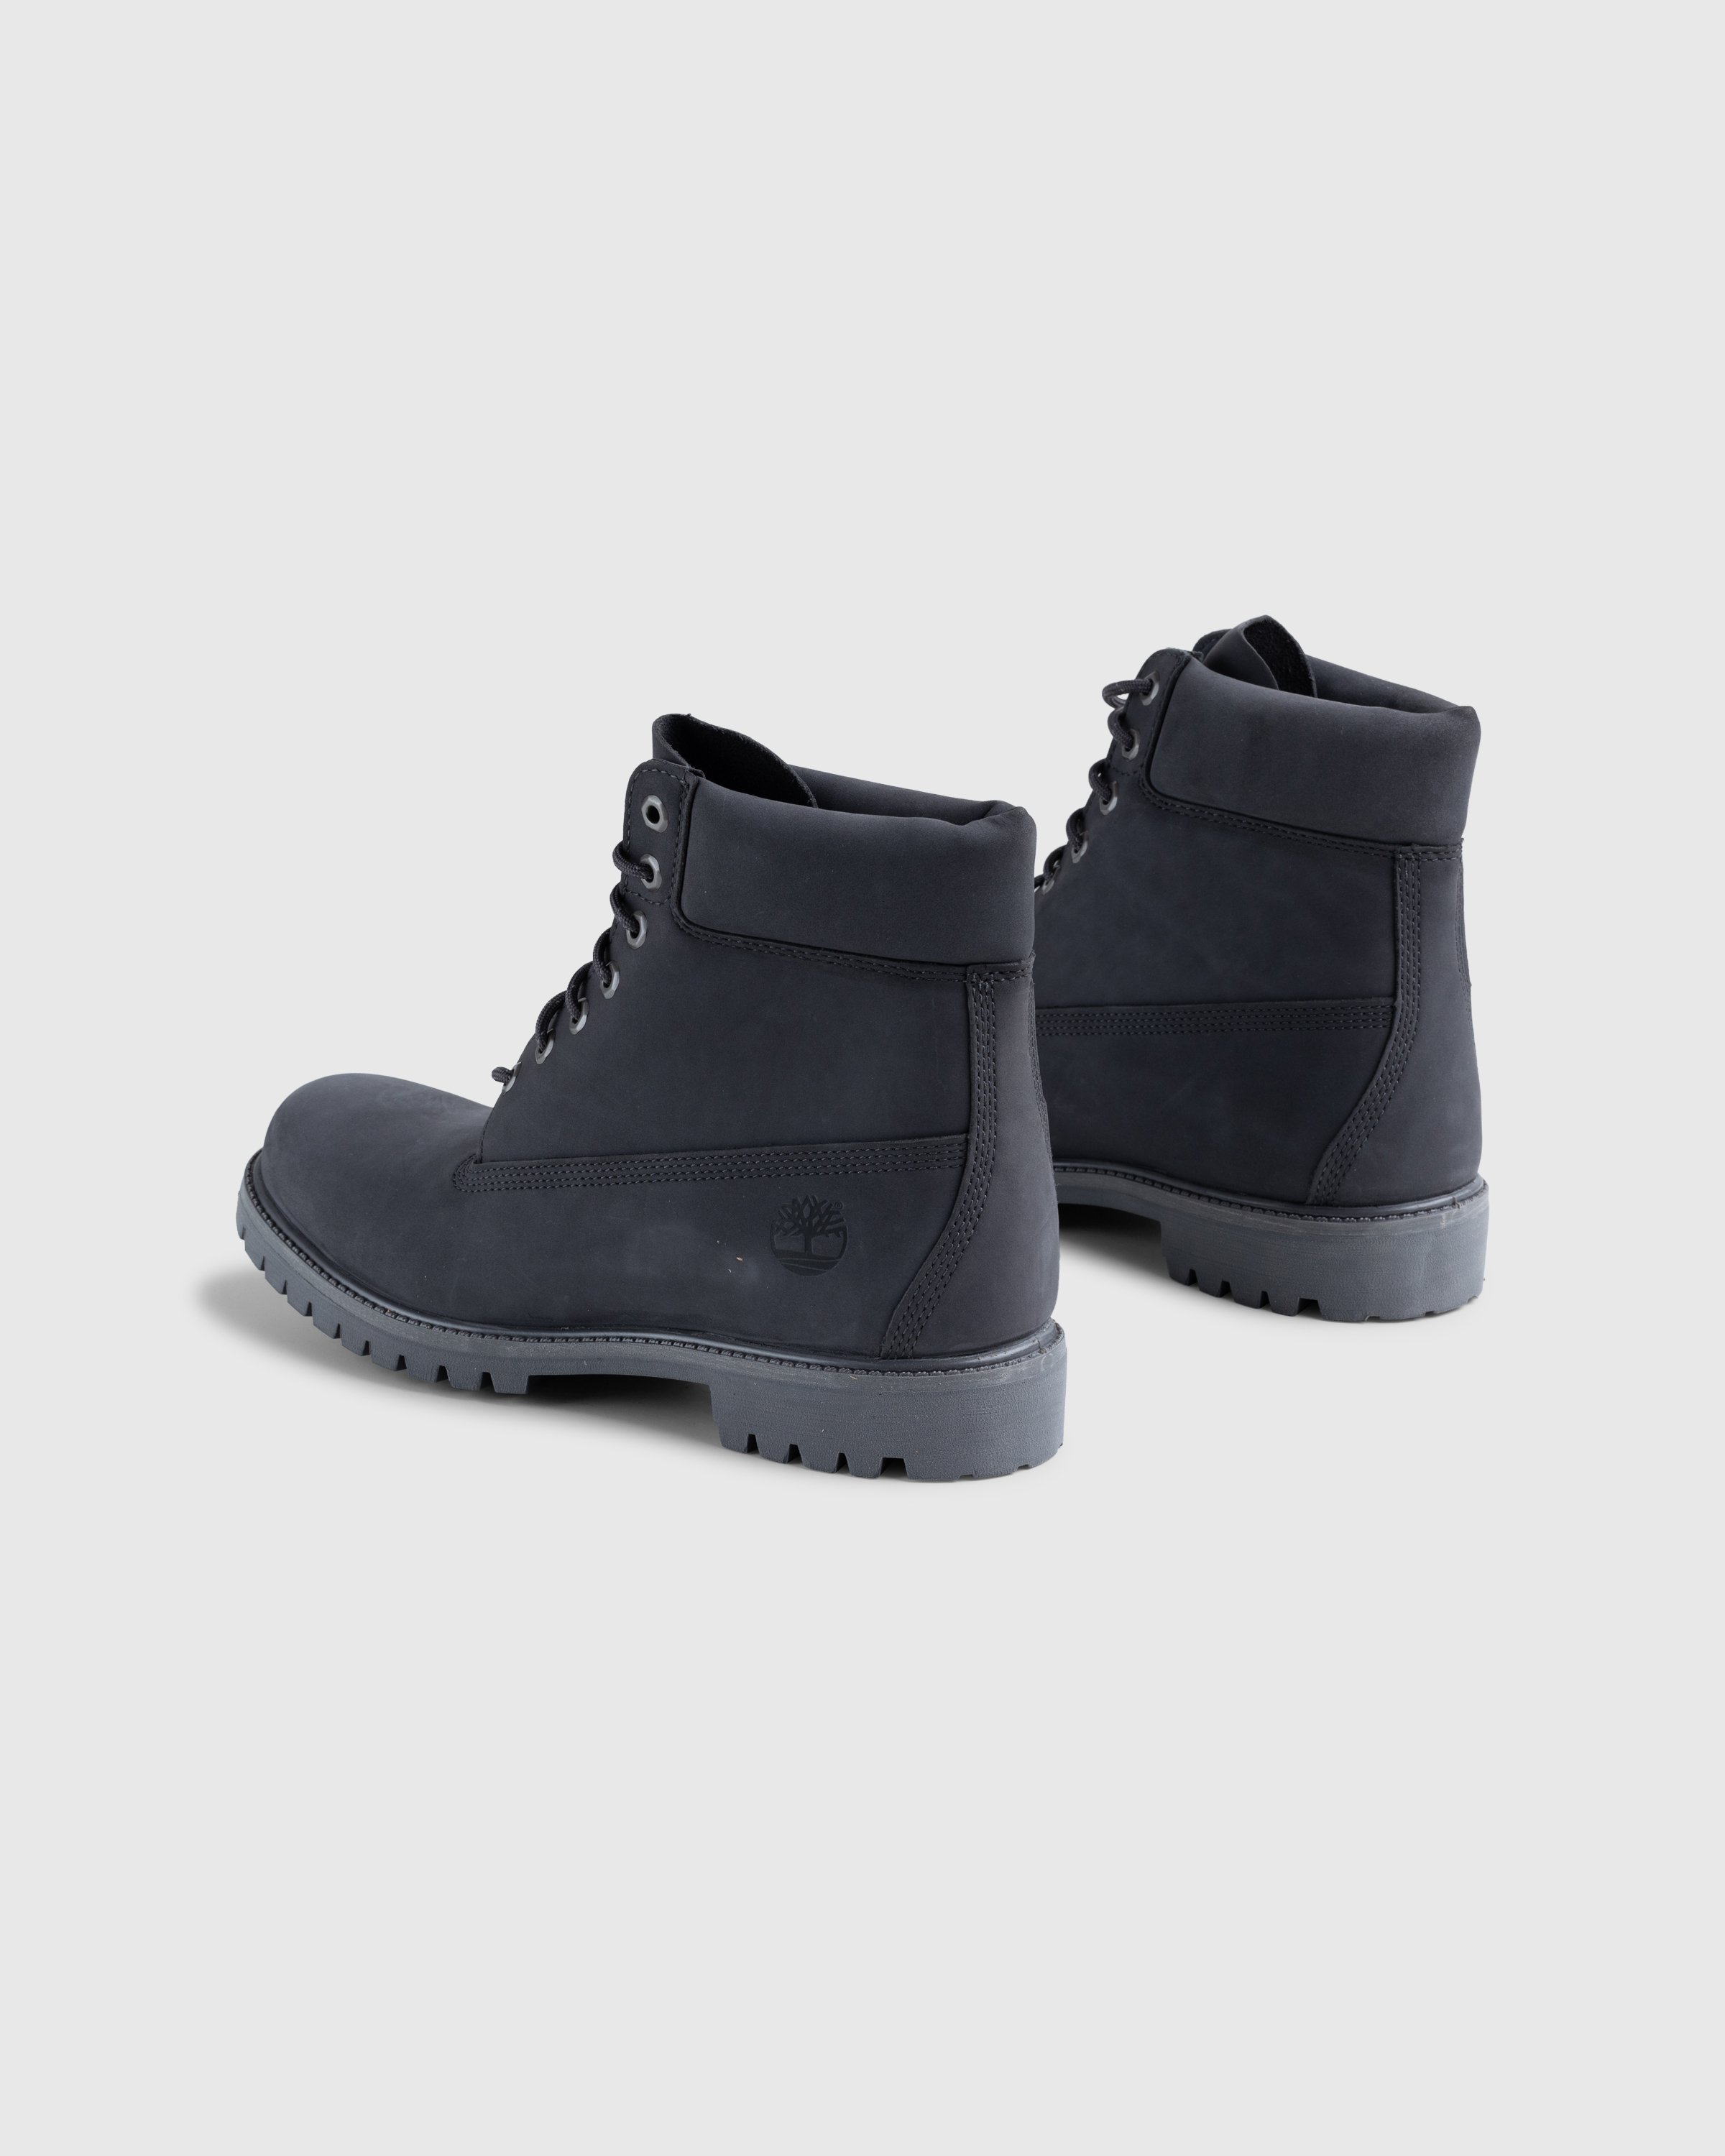 Timberland - 6 Inch Premium Boot Blackened Pearl - Footwear - Grey - Image 4